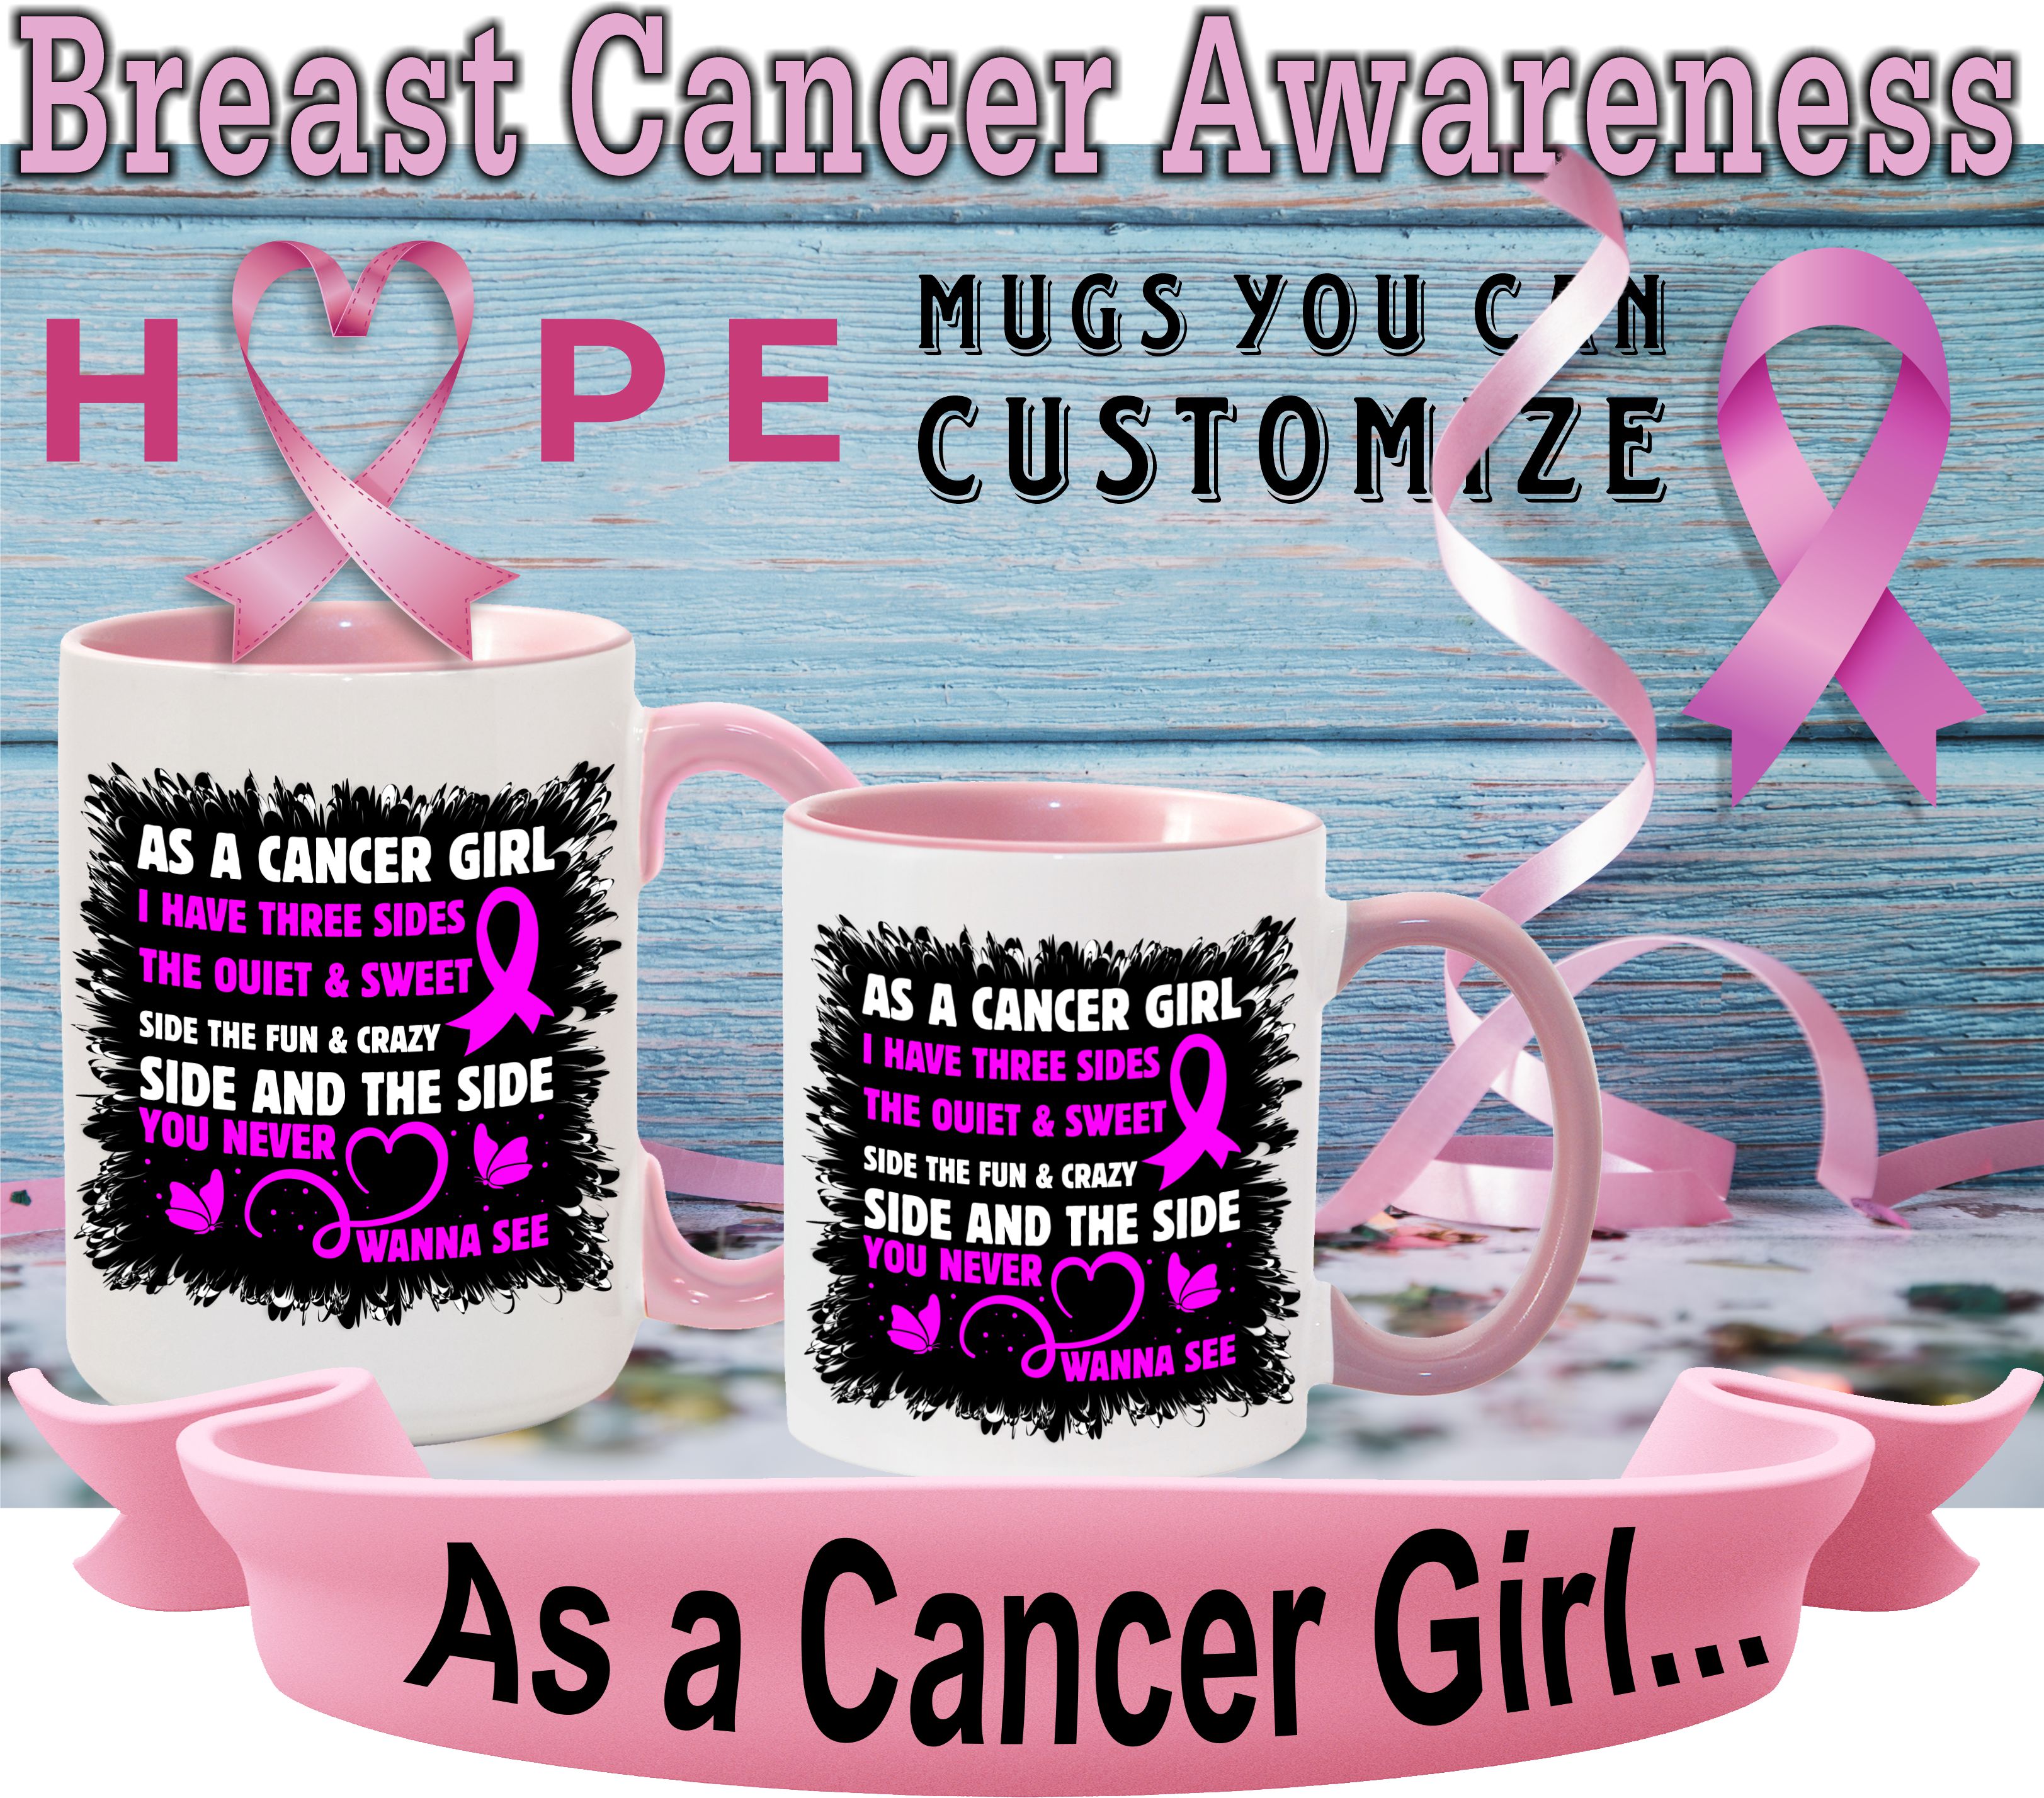 As a Cancer Girl…